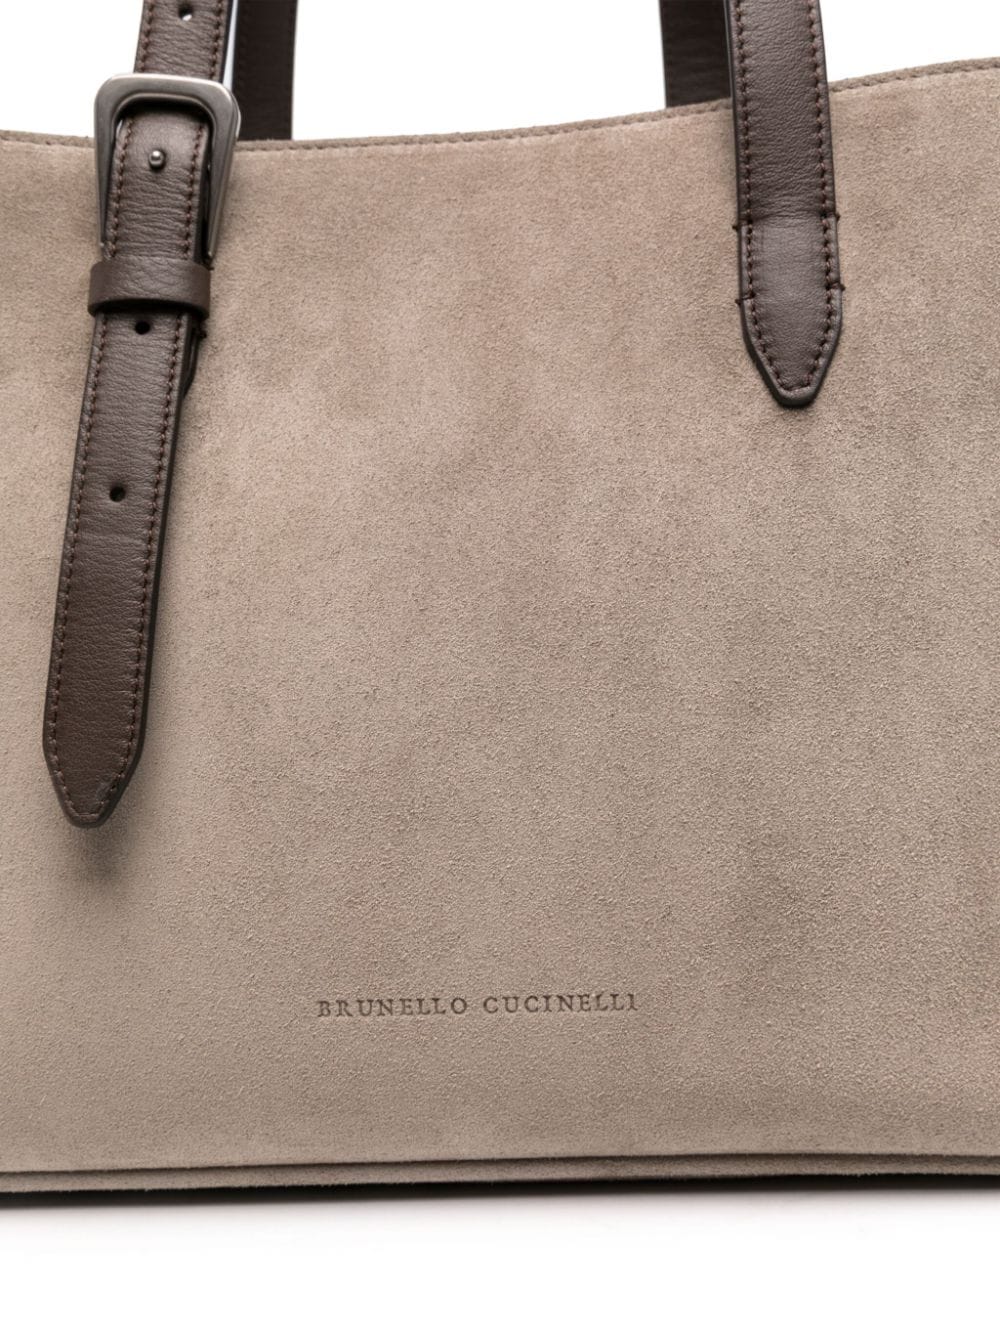 Brunello Cucinelli BRUNELLO CUCINELLI- Leather Handbag